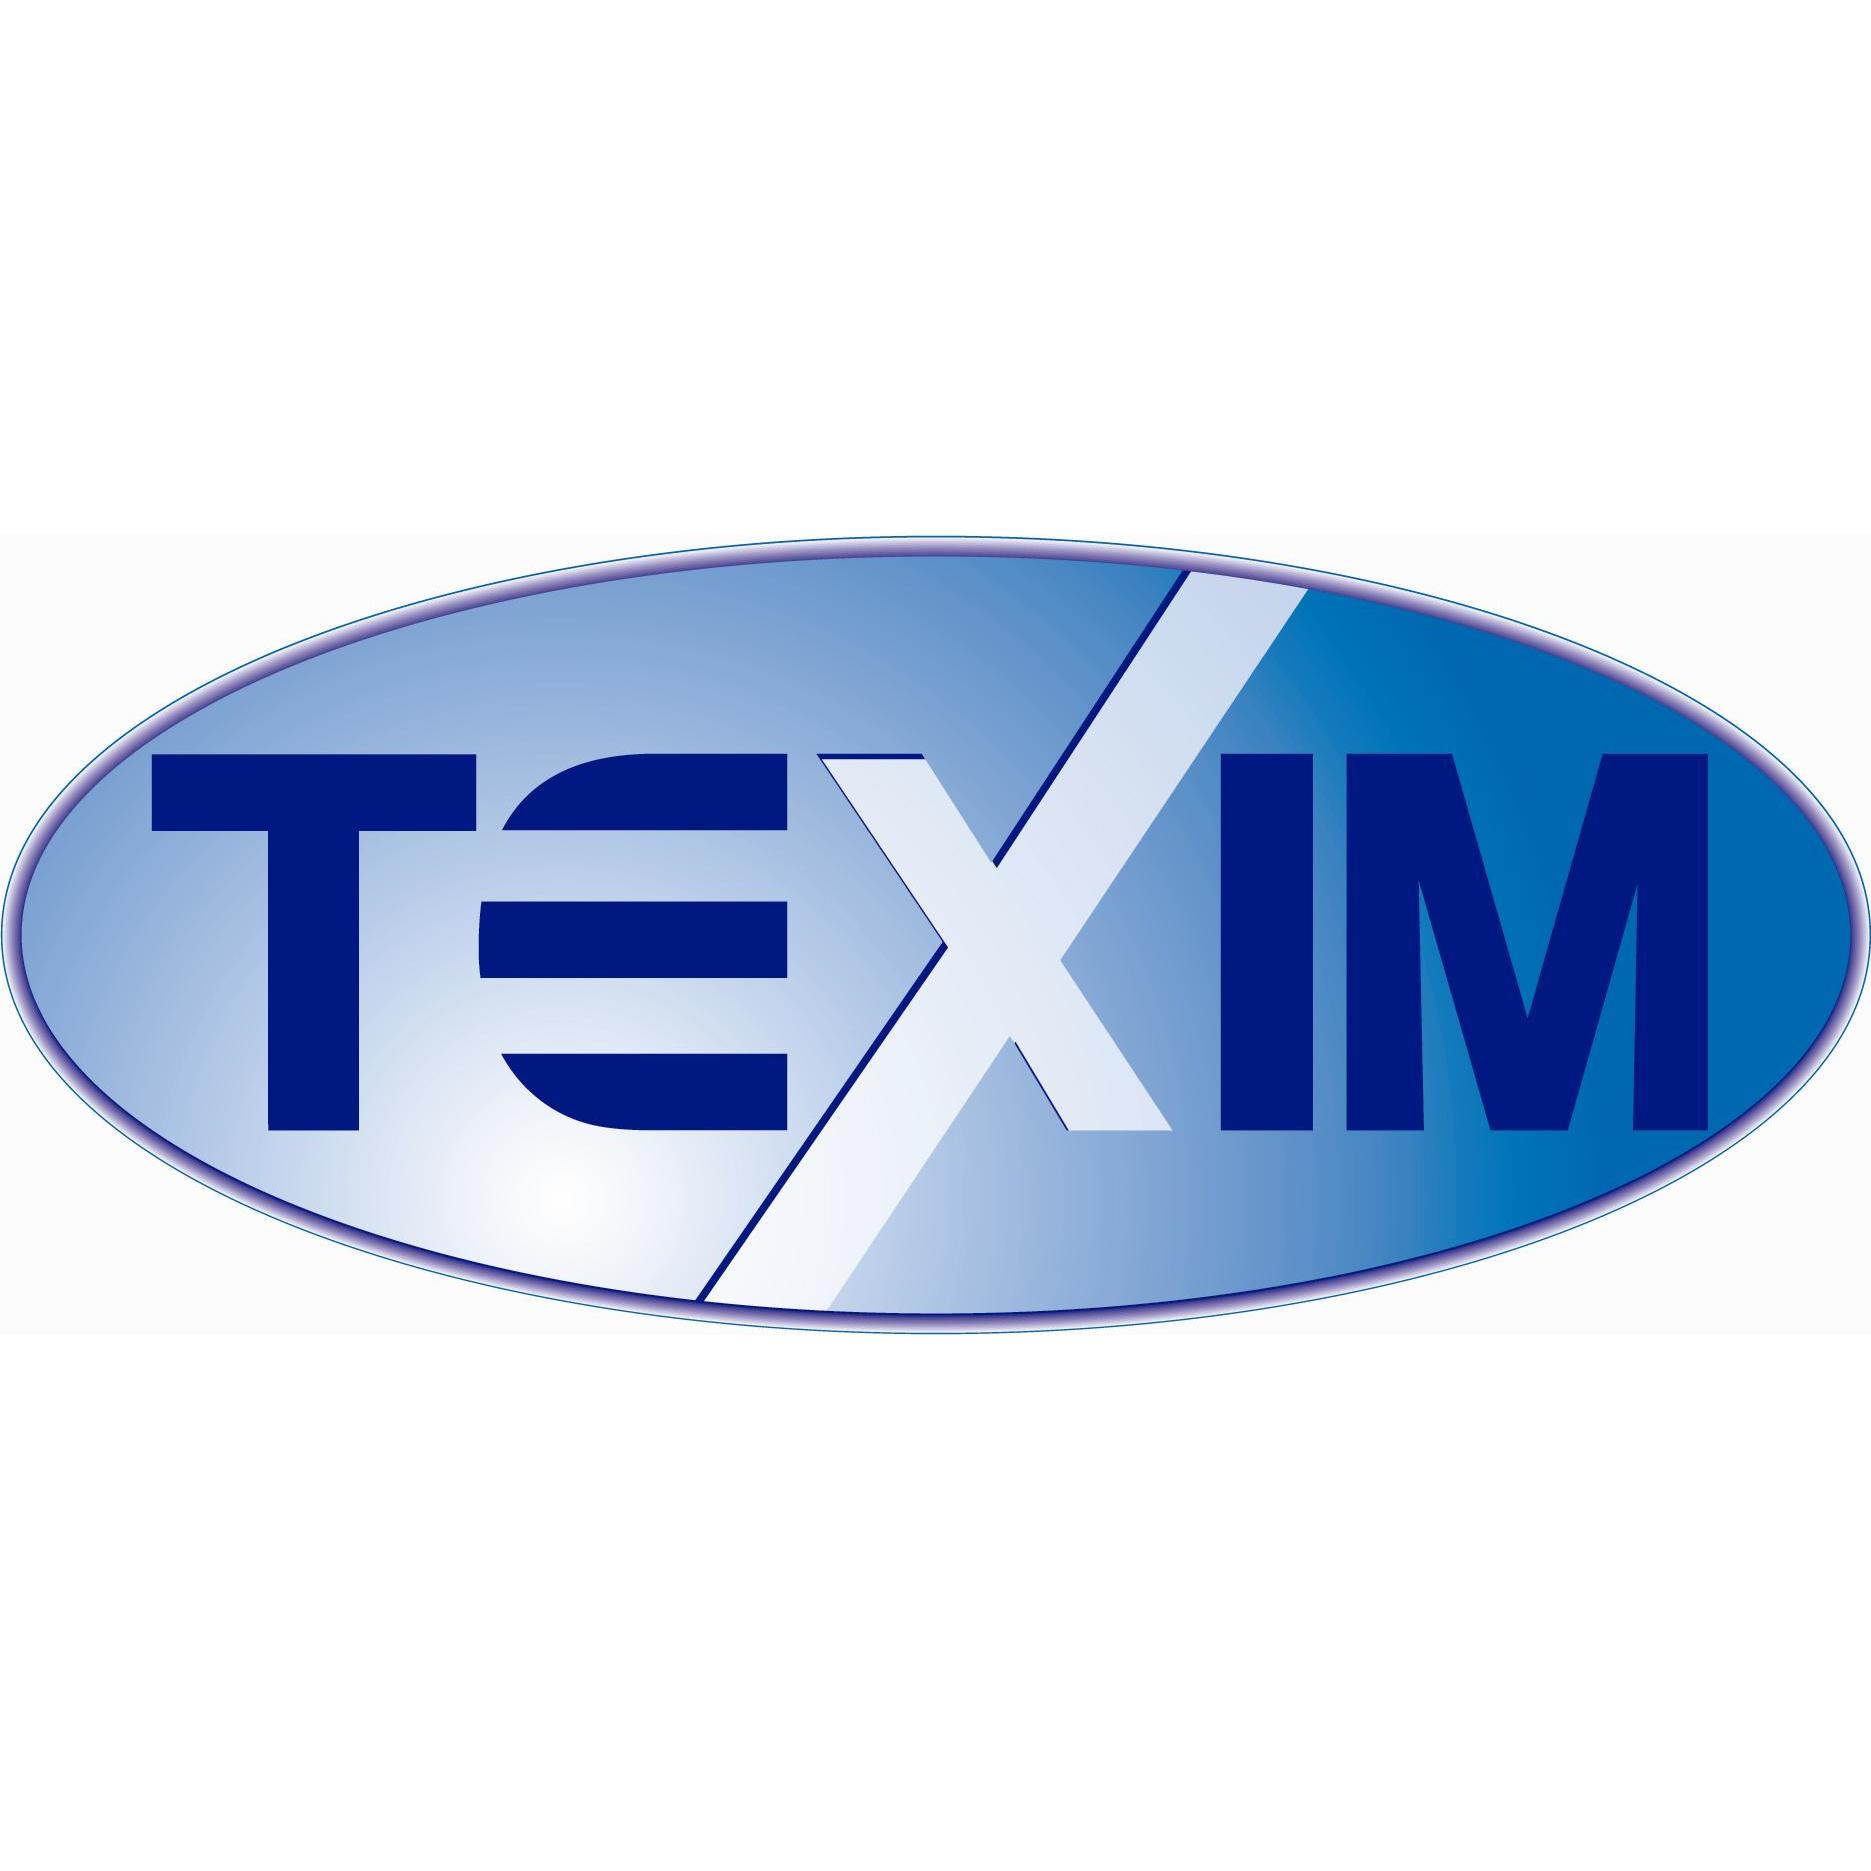 Texim Logo